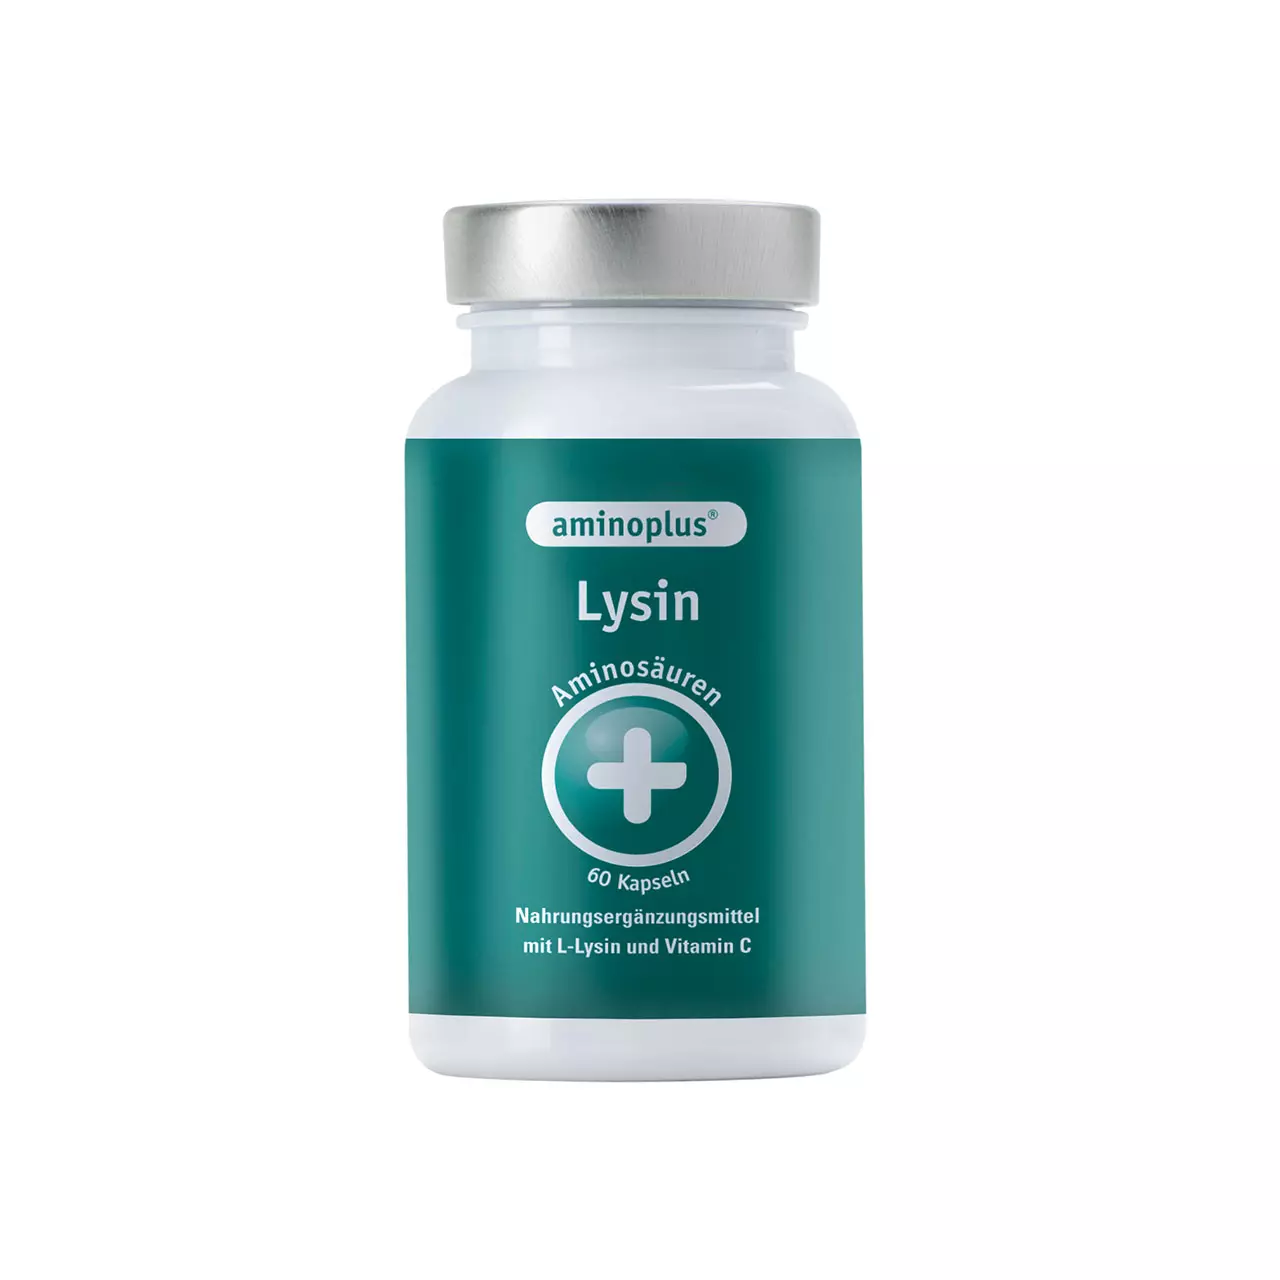 aminoplus® Lysin plus Vit. C (60 Kaps.)